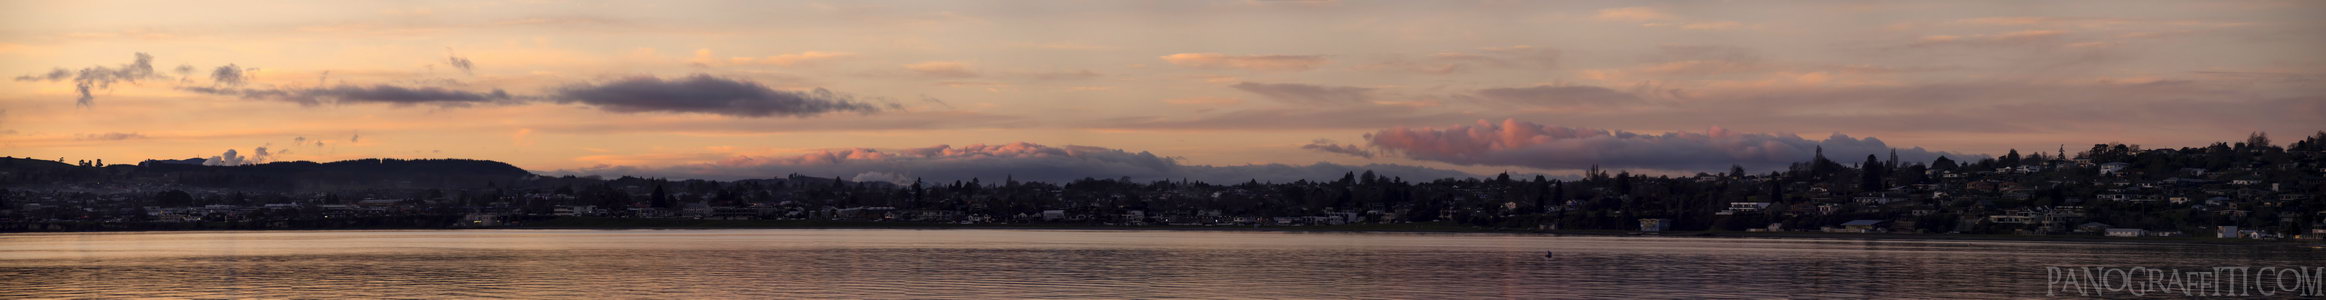 Lake Taupo and a Colorful Sky After Sunset - Lake Taupo, Taupo, Waikato, New Zealand